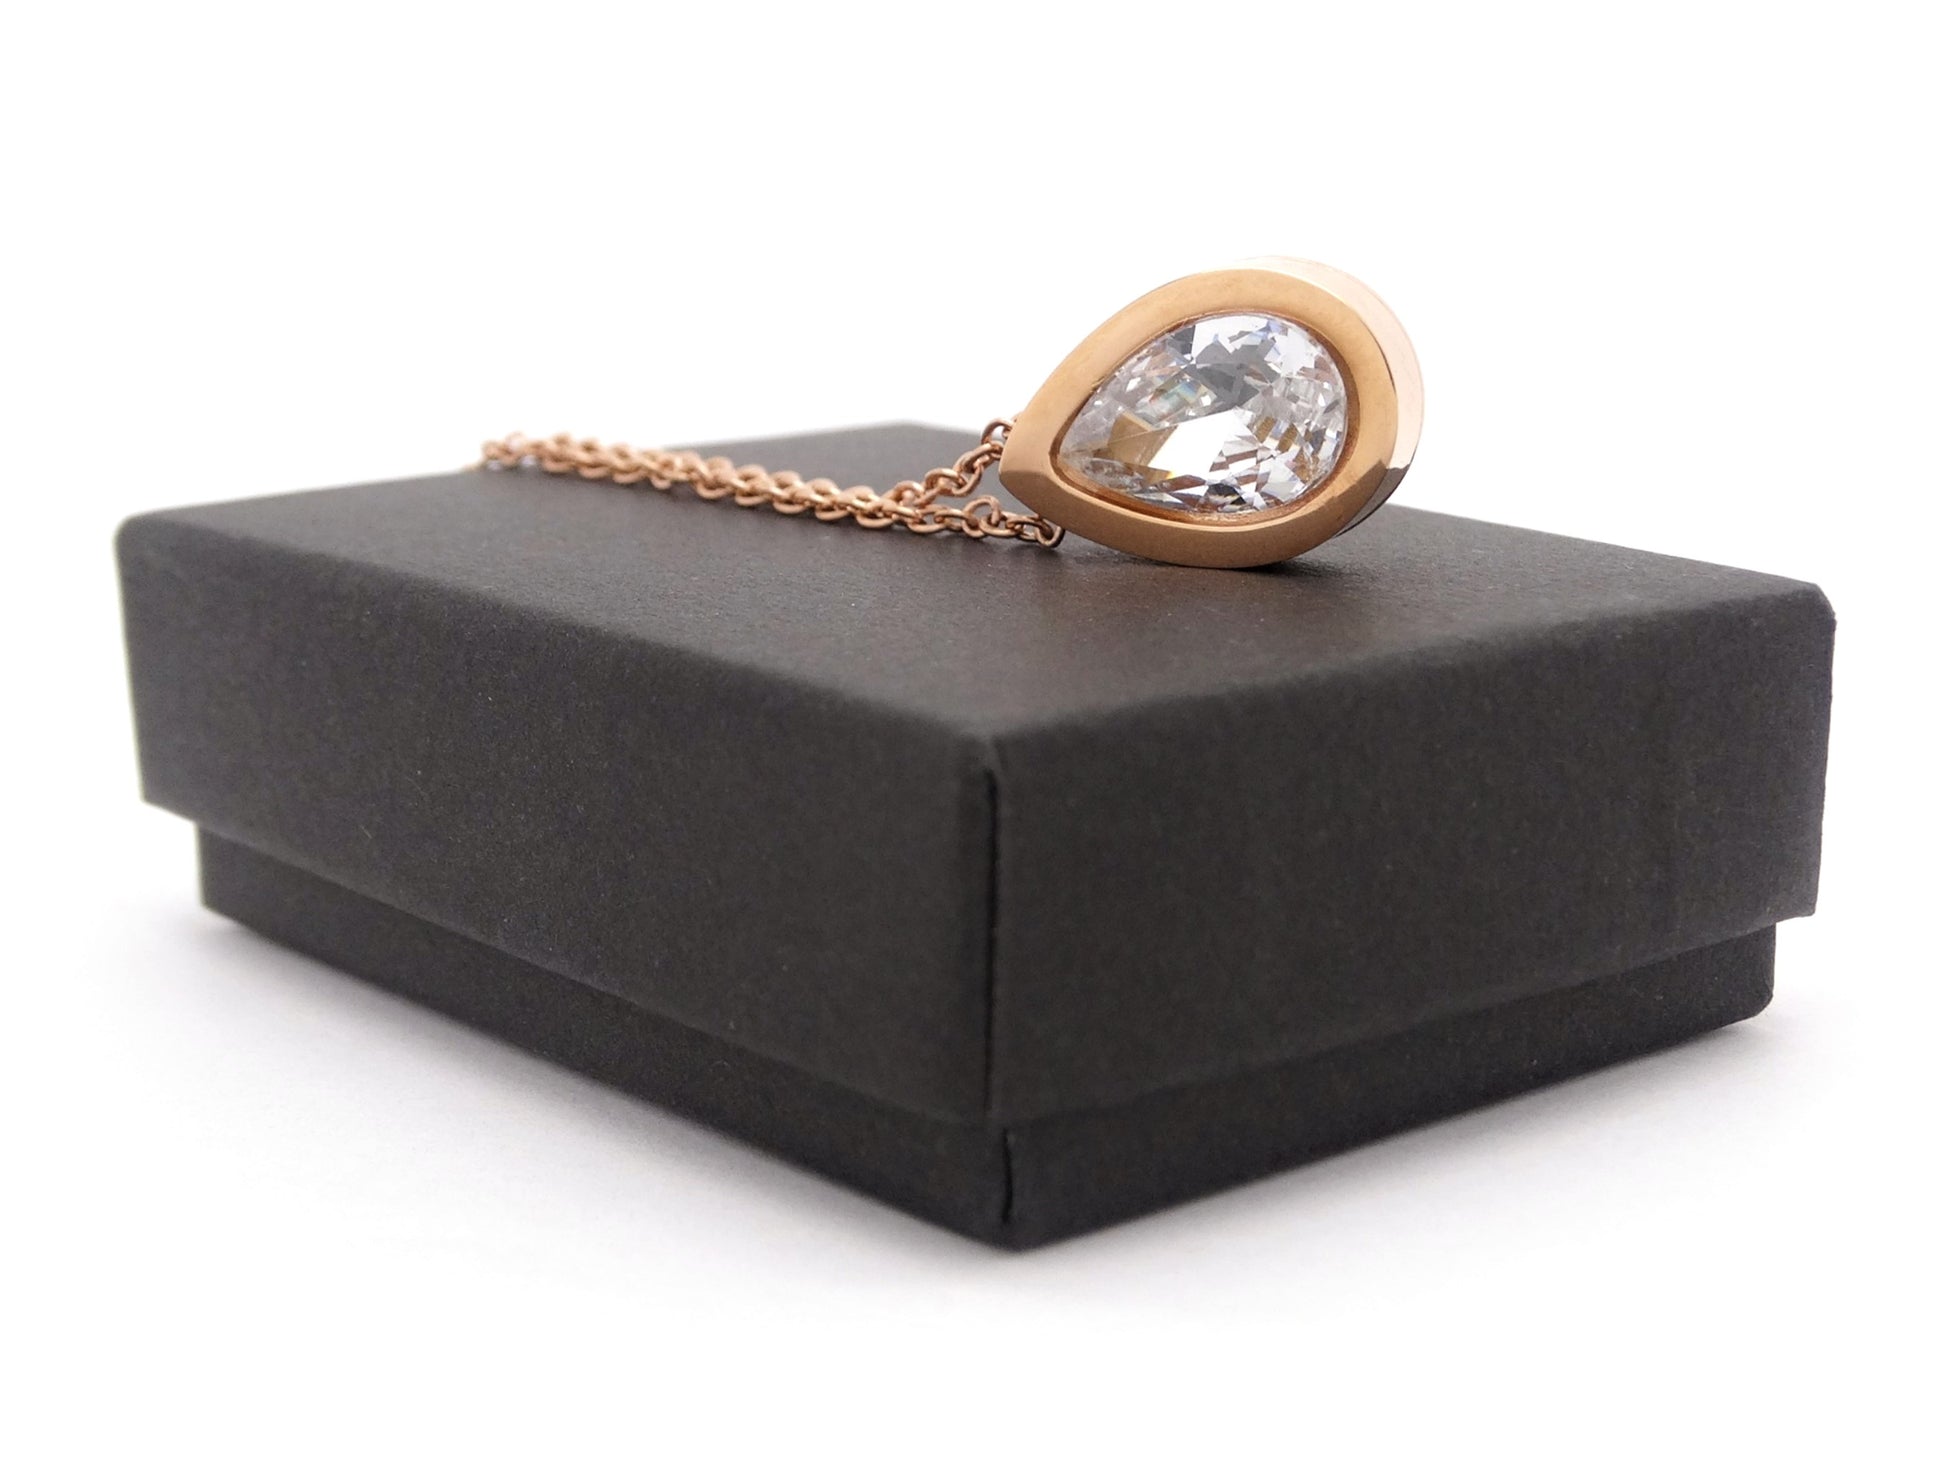 Rose gold pear gemstone pendant necklace GIFT BOX